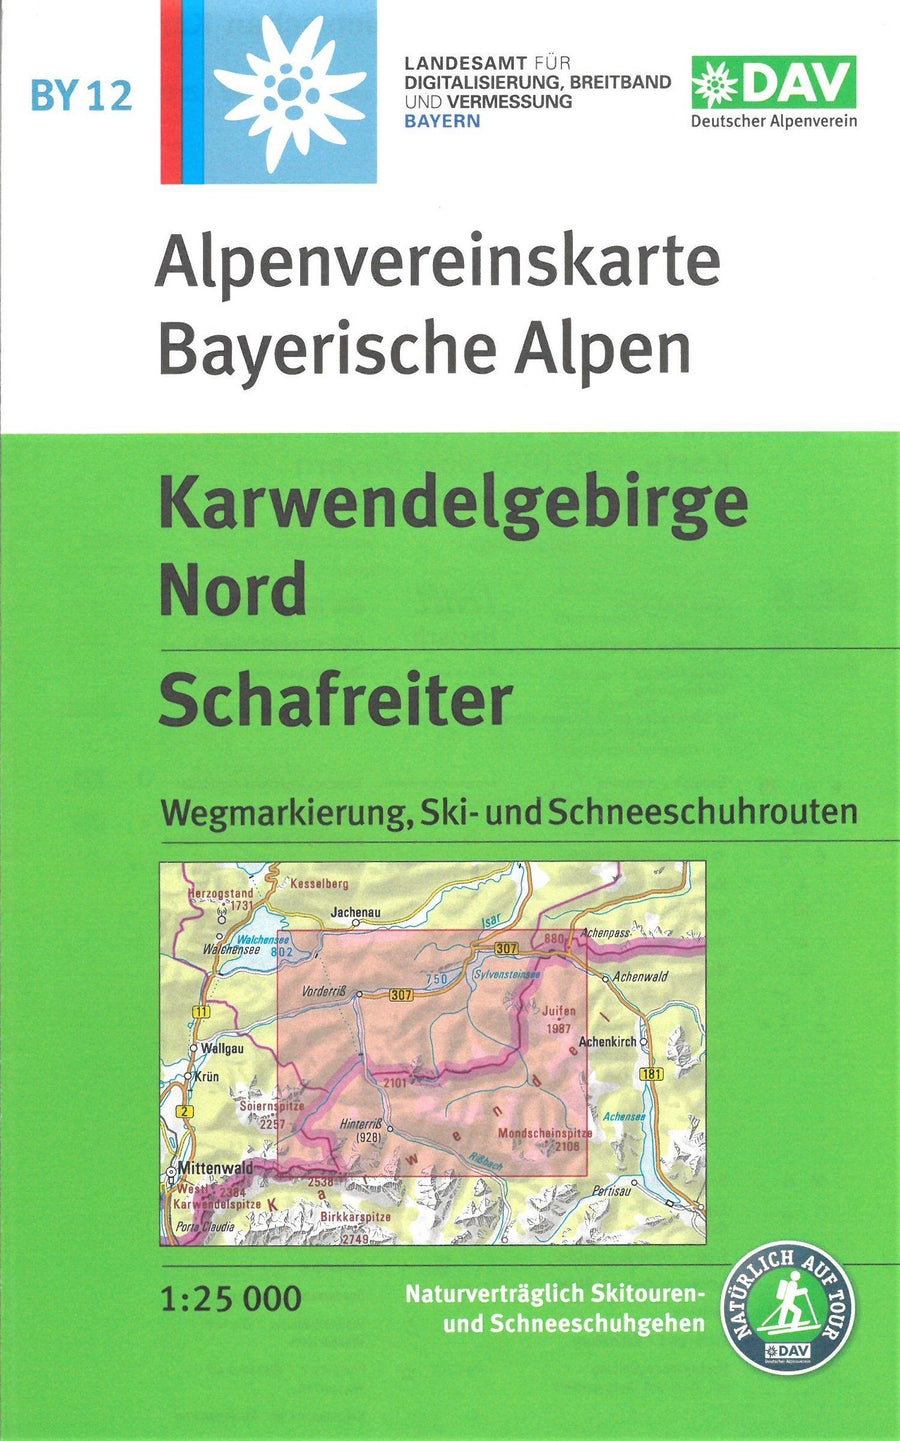 Carte de randonnée & ski - Karwendelgebirge Nord Schafreiter, n° BY12 (Alpes bavaroises) | Alpenverein carte pliée Alpenverein 